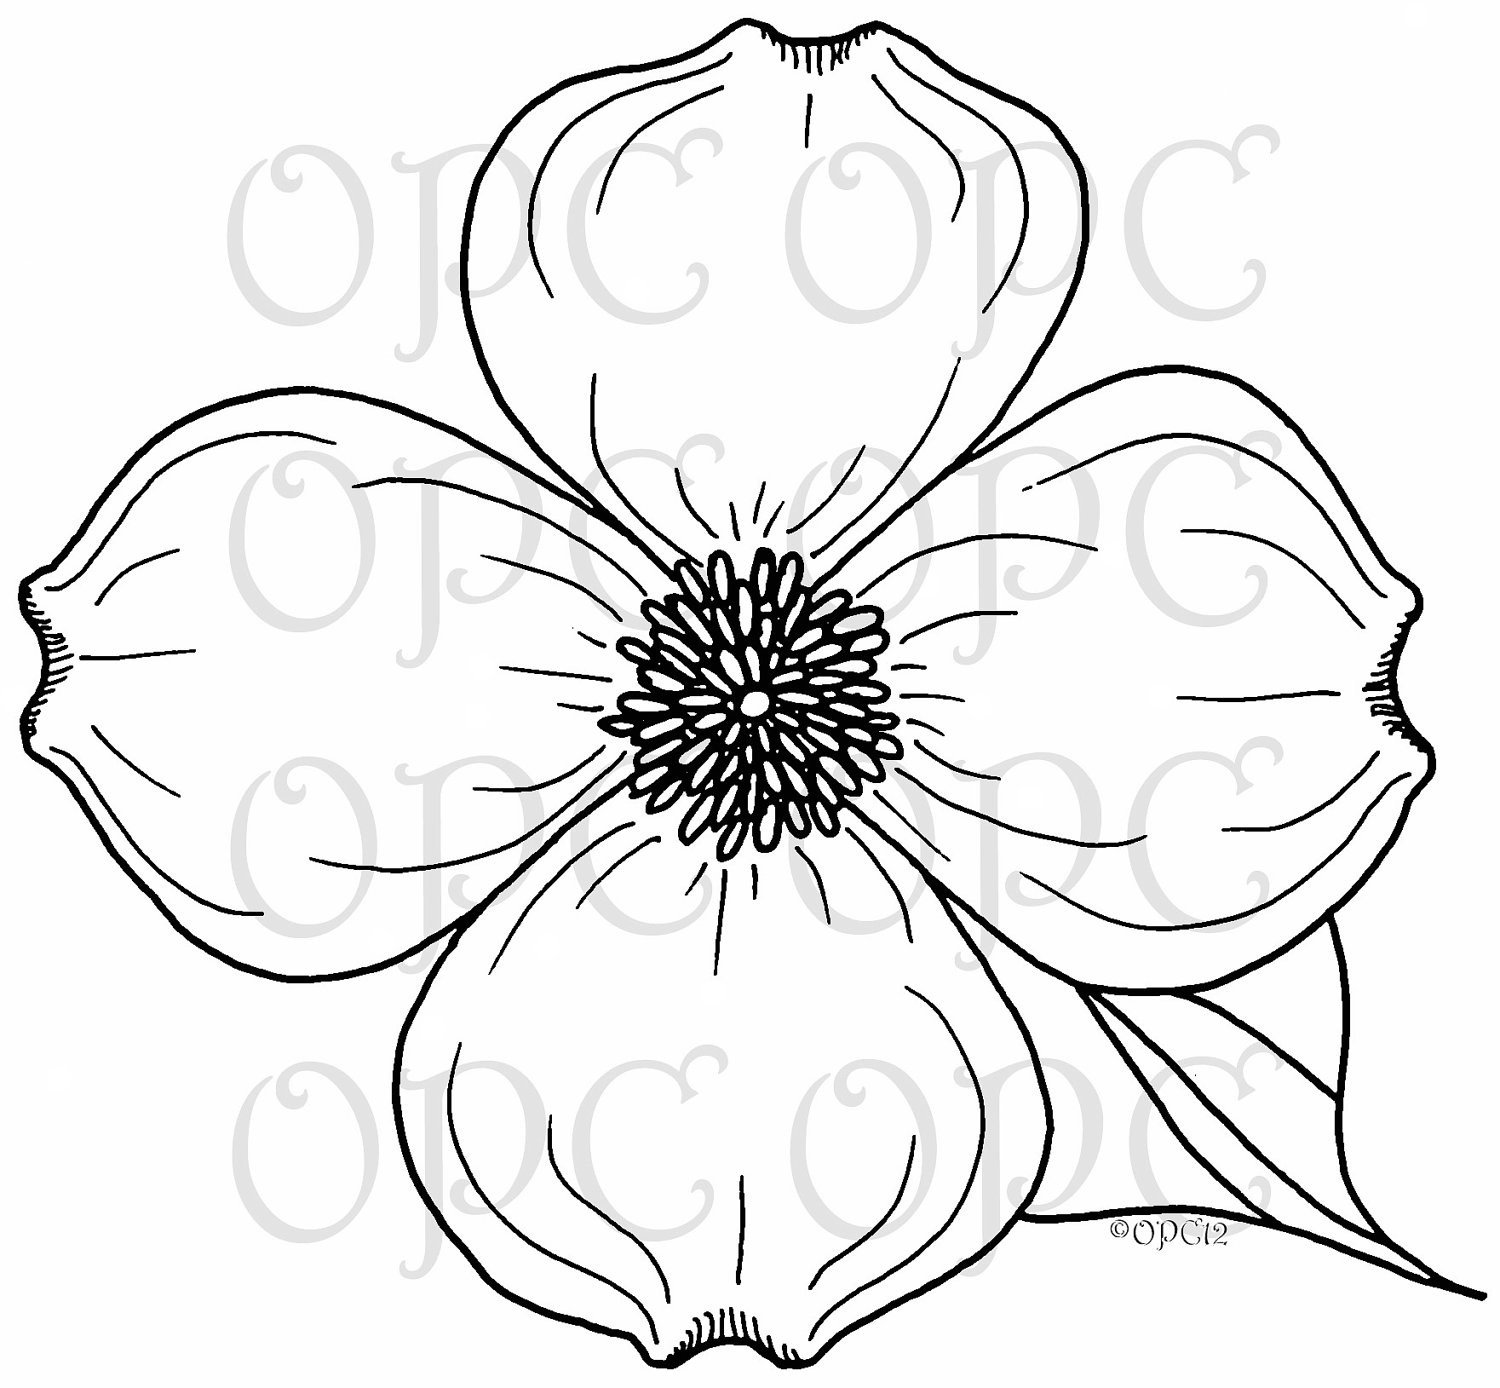 Dogwood Flower Outline Digital Stamp Jessica S Dogwood by Oakpondcreations On Etsy